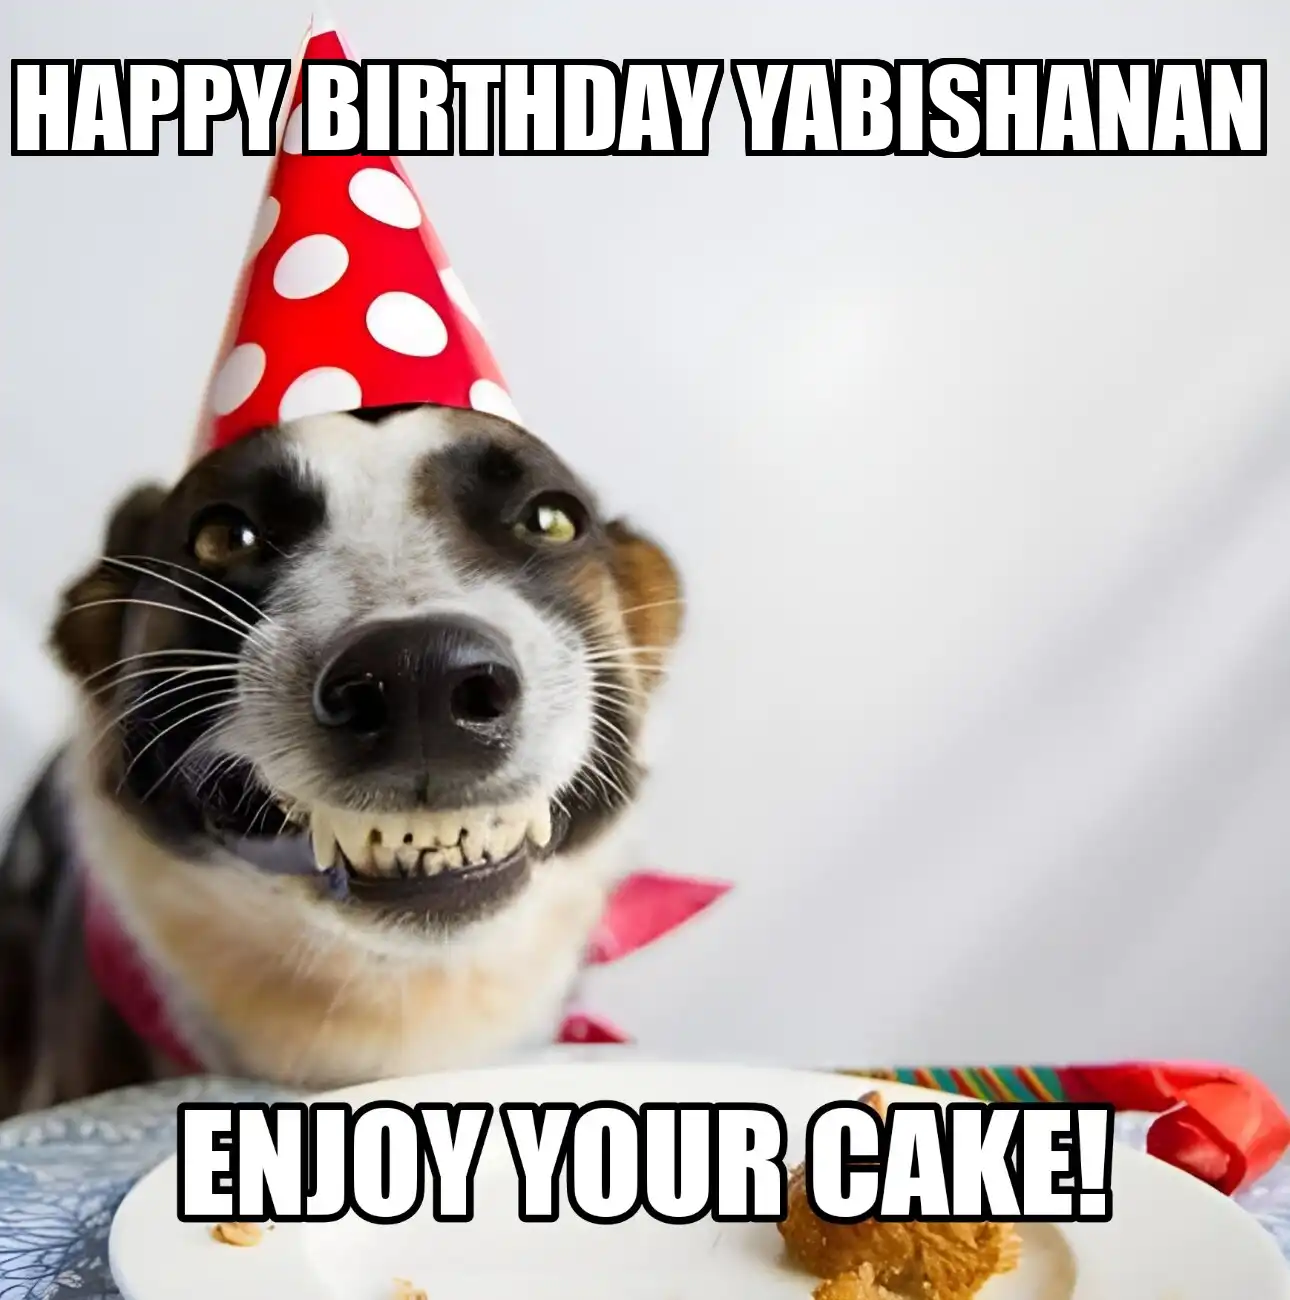 Happy Birthday Yabishanan Enjoy Your Cake Dog Meme